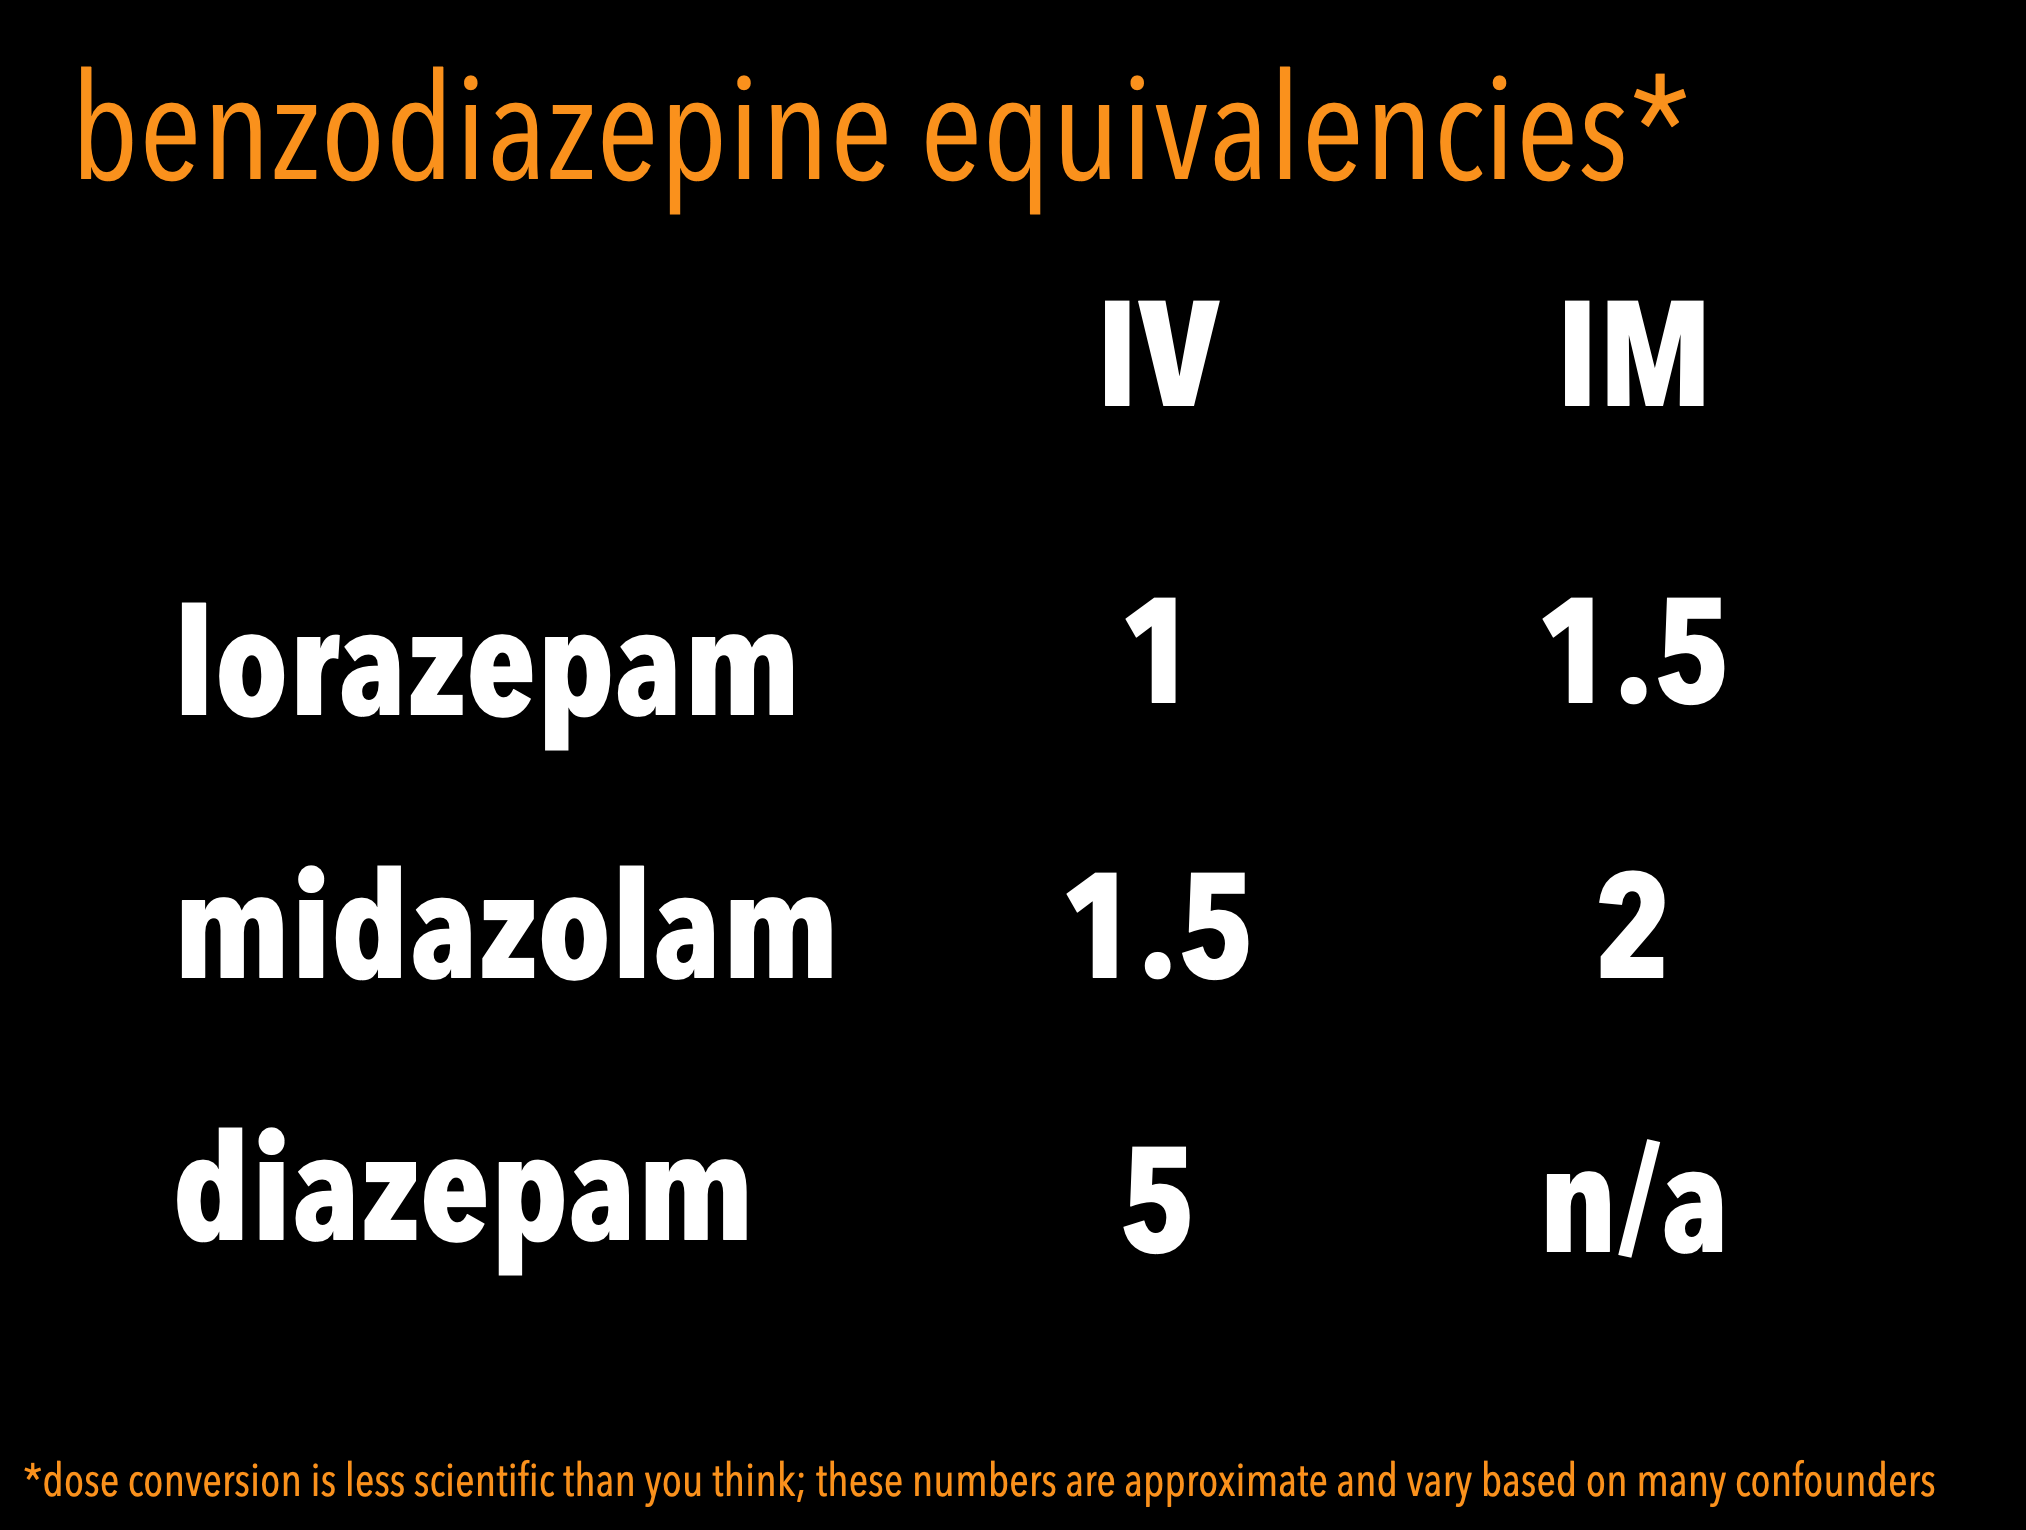 benzodiazepines-maimonides-emergency-medicine-residency